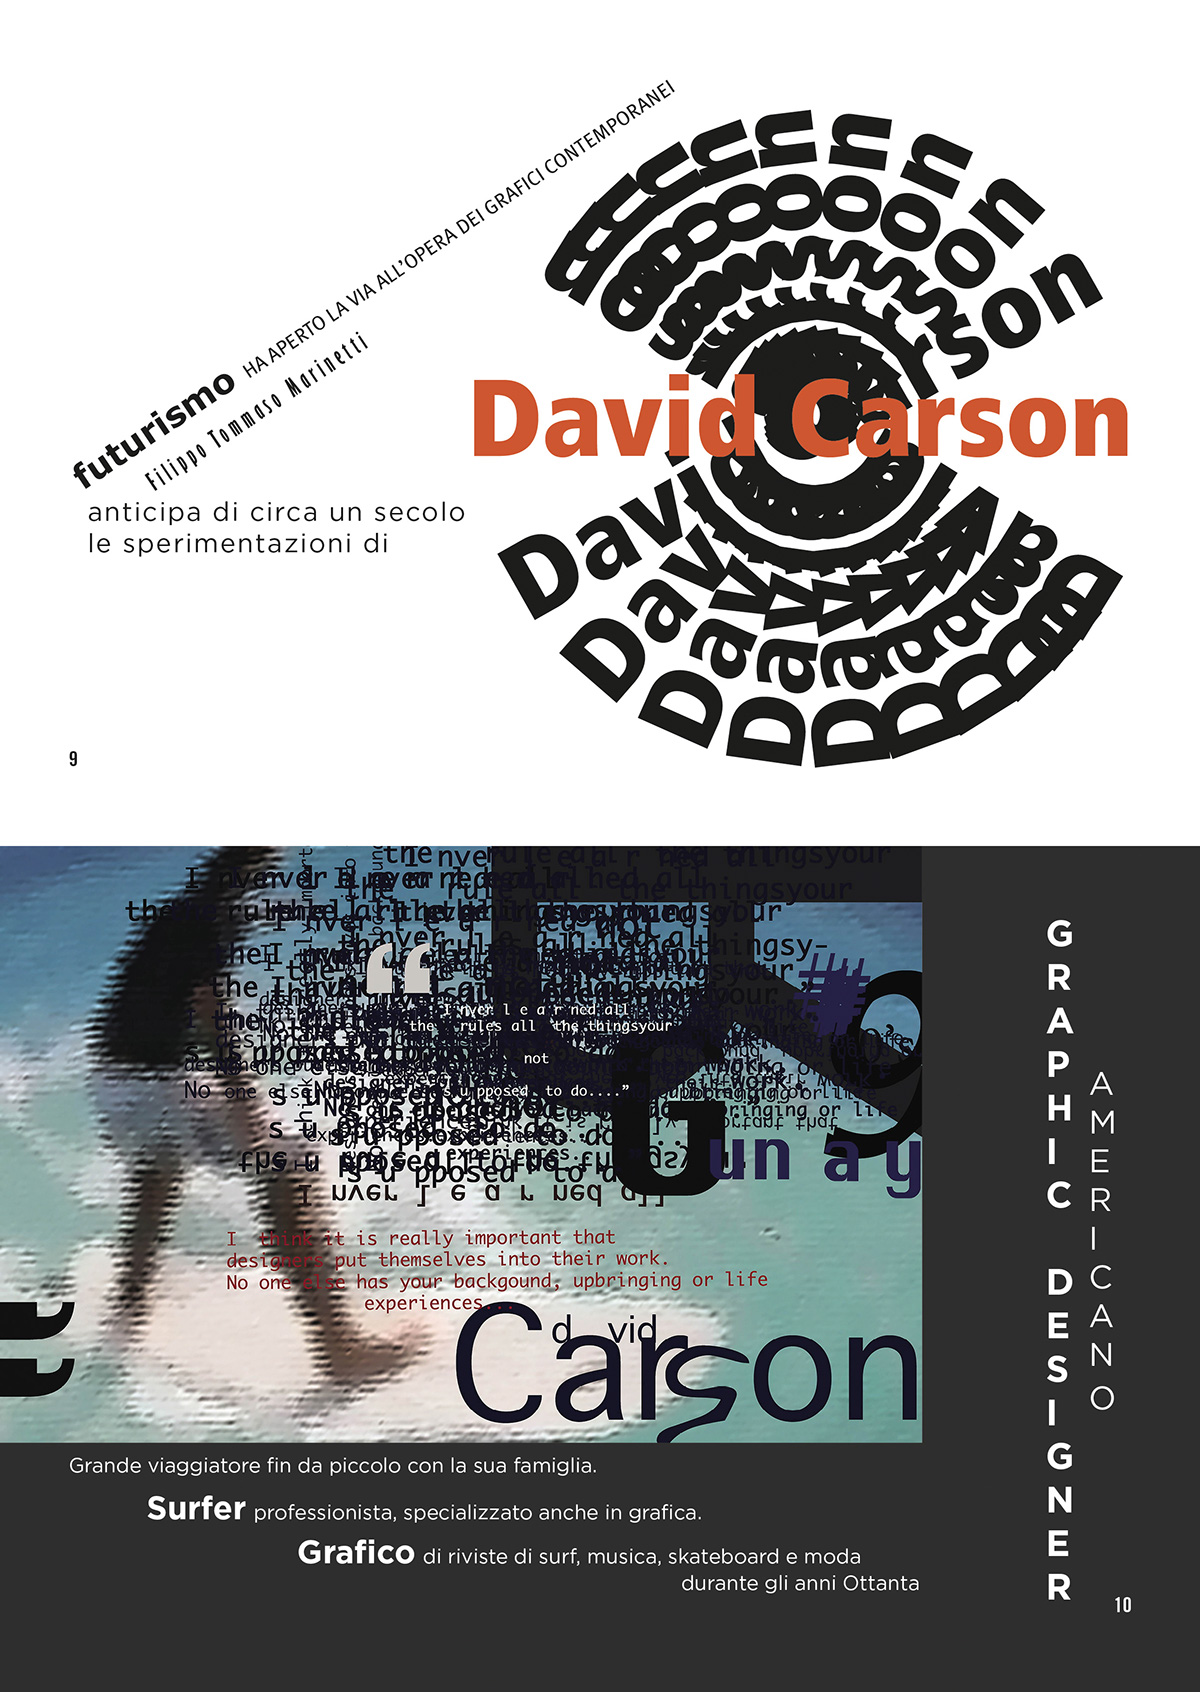 #futurism #David Carson #typography #editorial design 